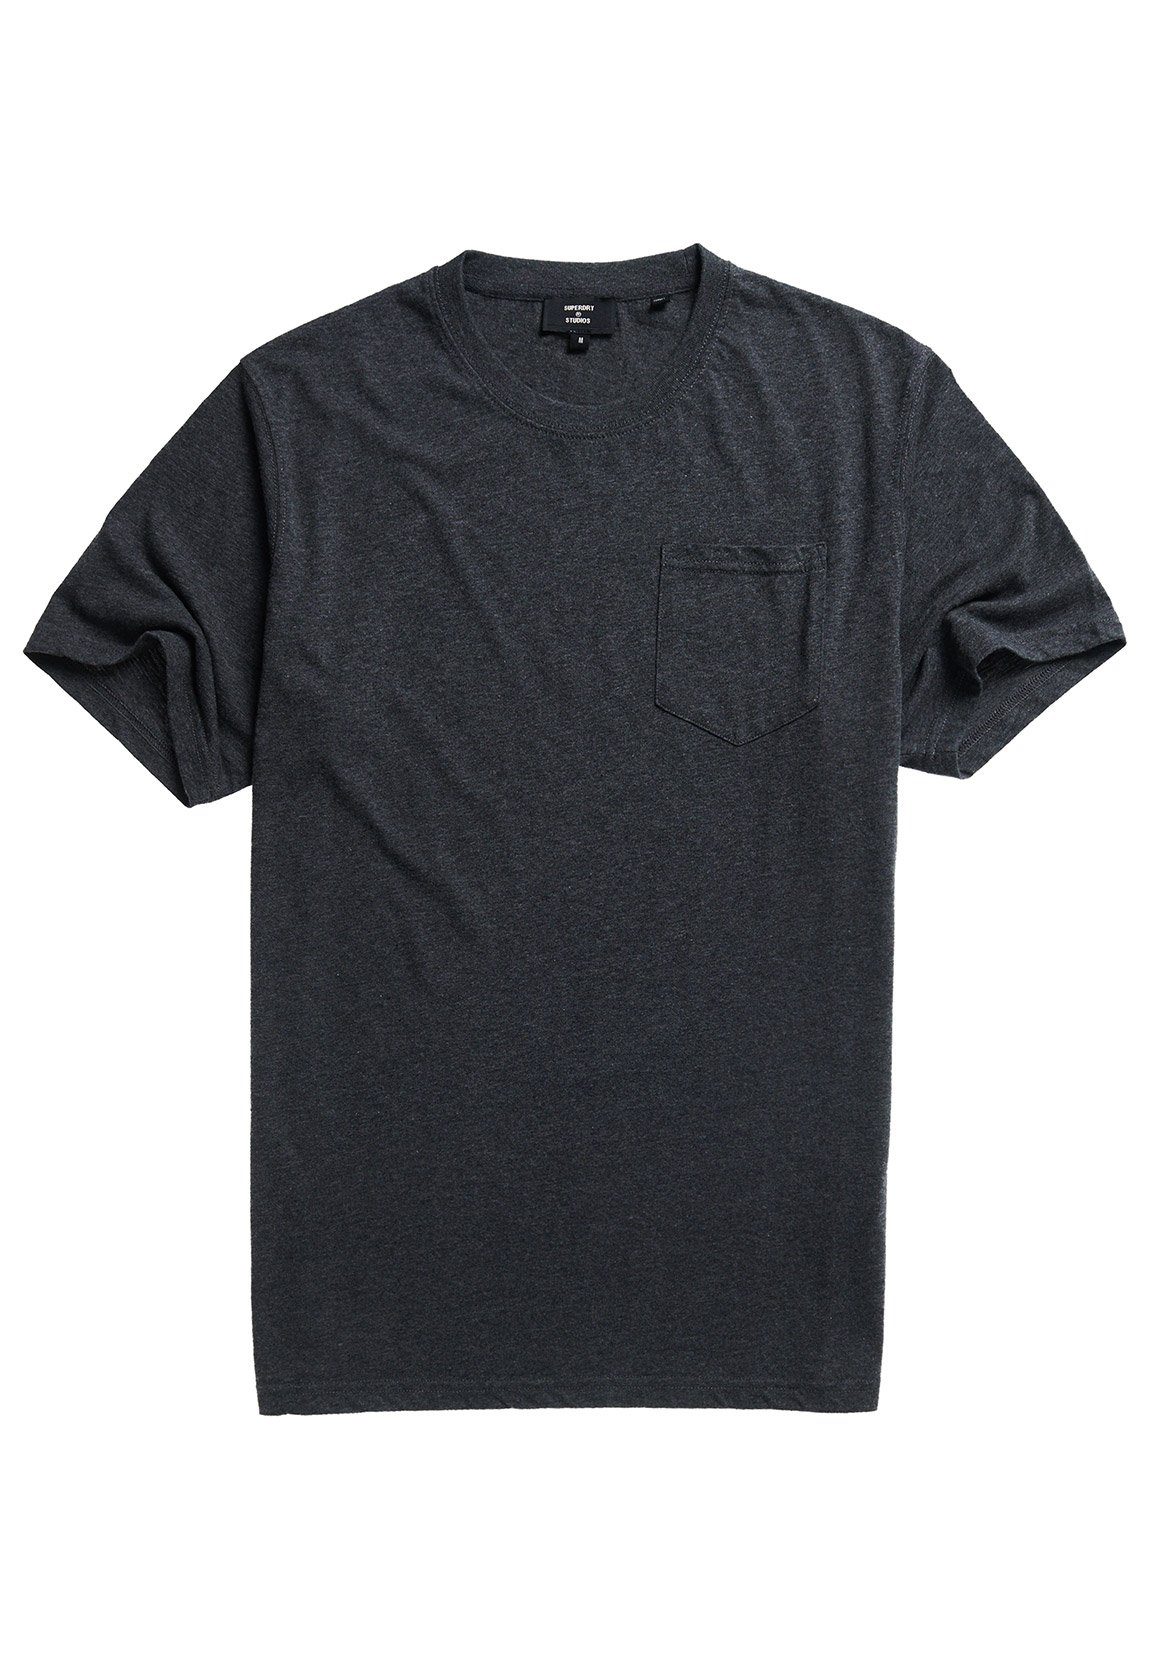 Superdry T-Shirt Superdry T-Shirt Marl TEE Dunkelgrau Charcoal Herren AUTHENTIC COTTON